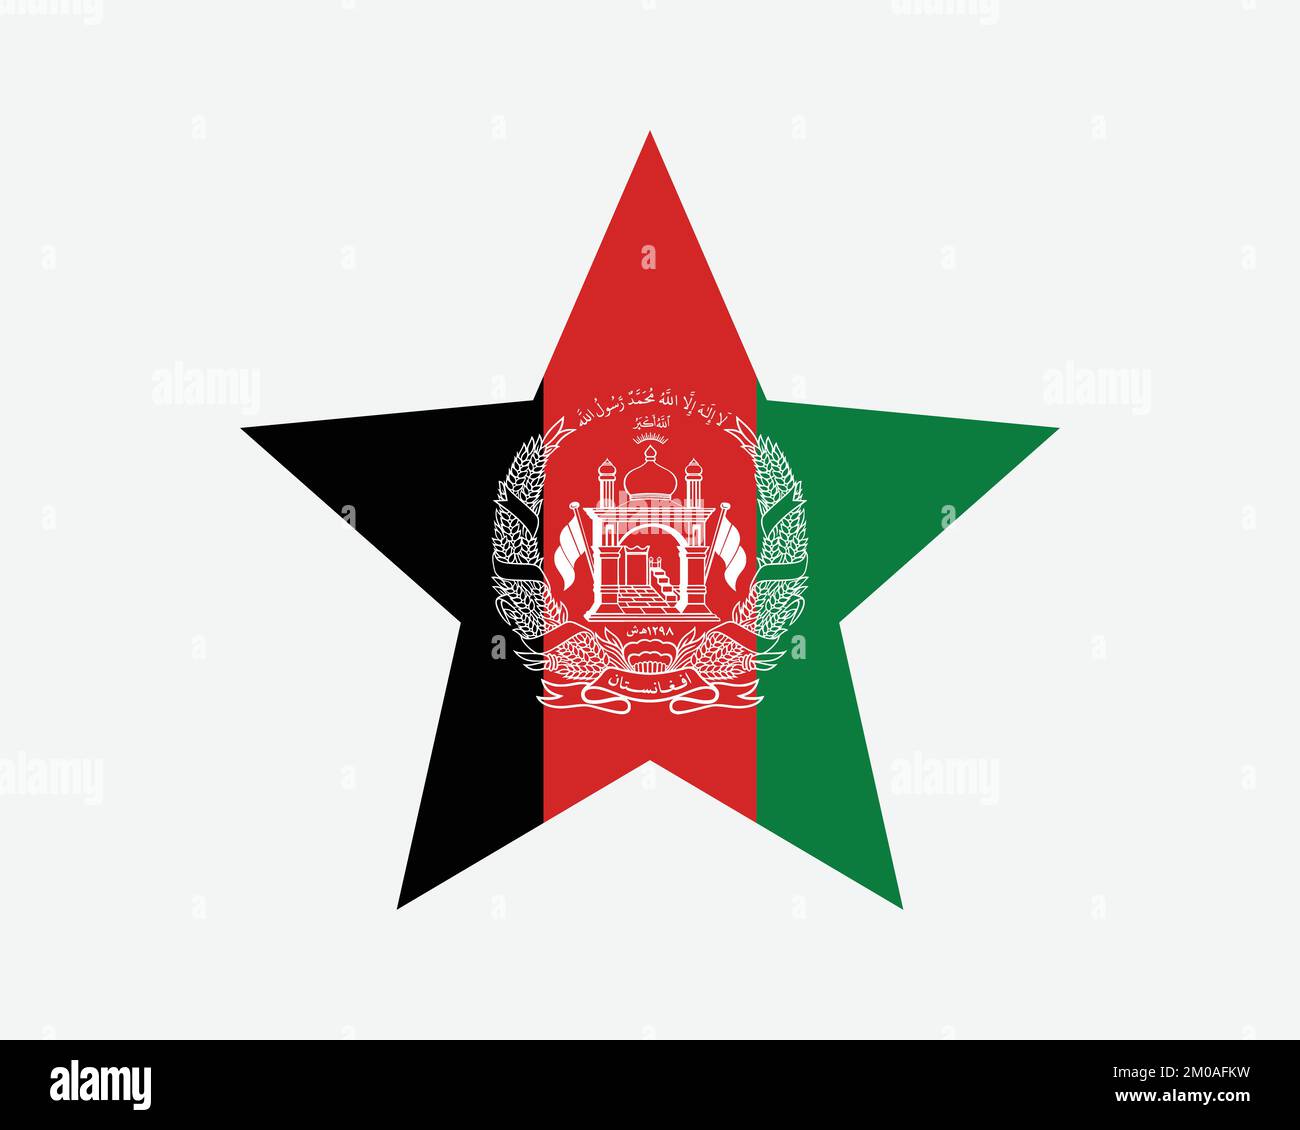 Afghanistan Star Flag. Afghan Star Shape Flag. Islamic Republic of Afghanistan Country National Banner Icon Symbol Vector 2D Flat Artwork Graphic Illu Stock Vector